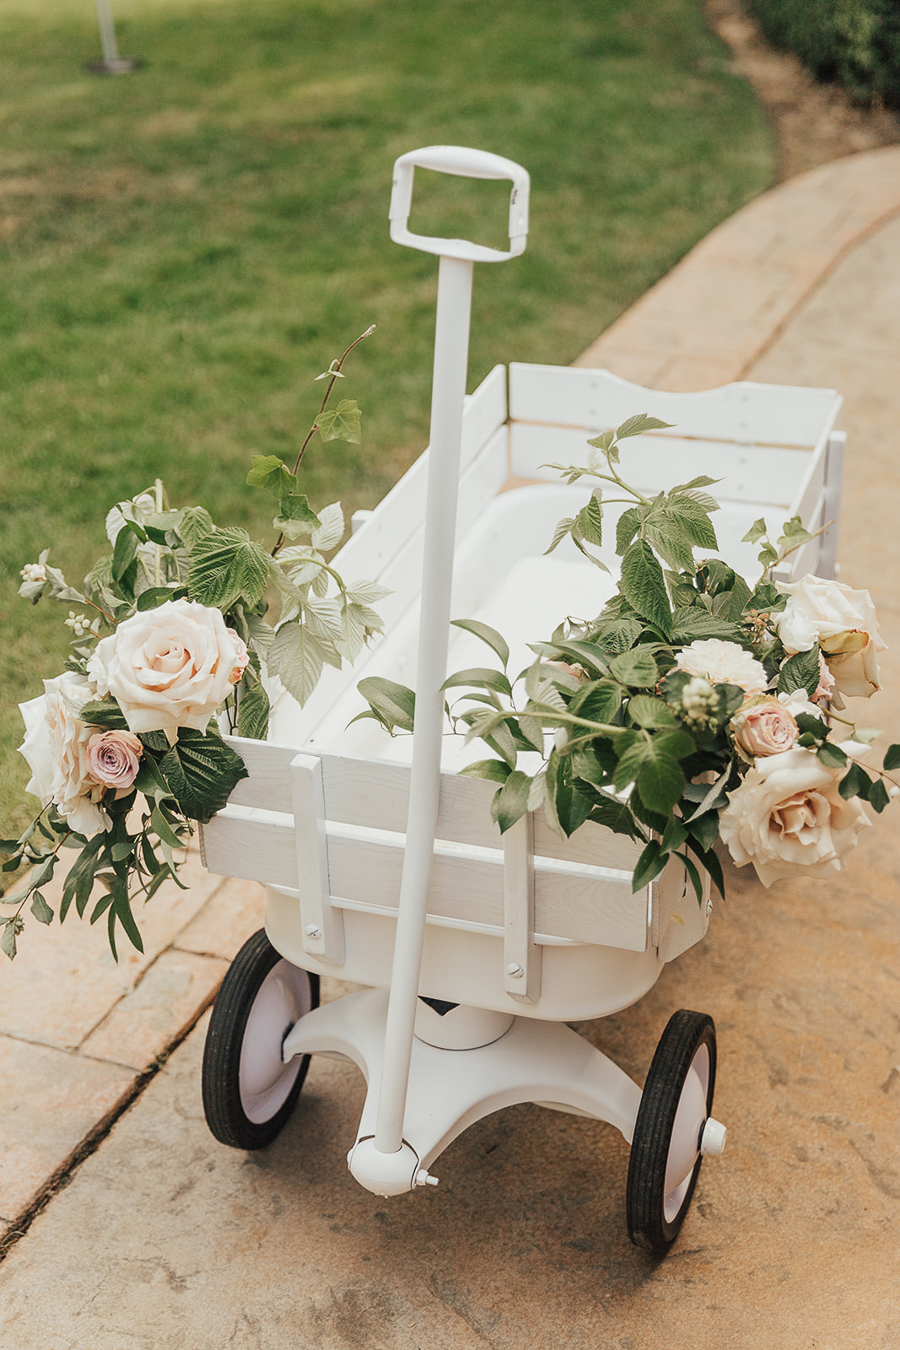 DIY project spray paint Radio Flyer wagon all white, white wagon, wedding wagon with flowers, flower wagon, wedding dog wagon